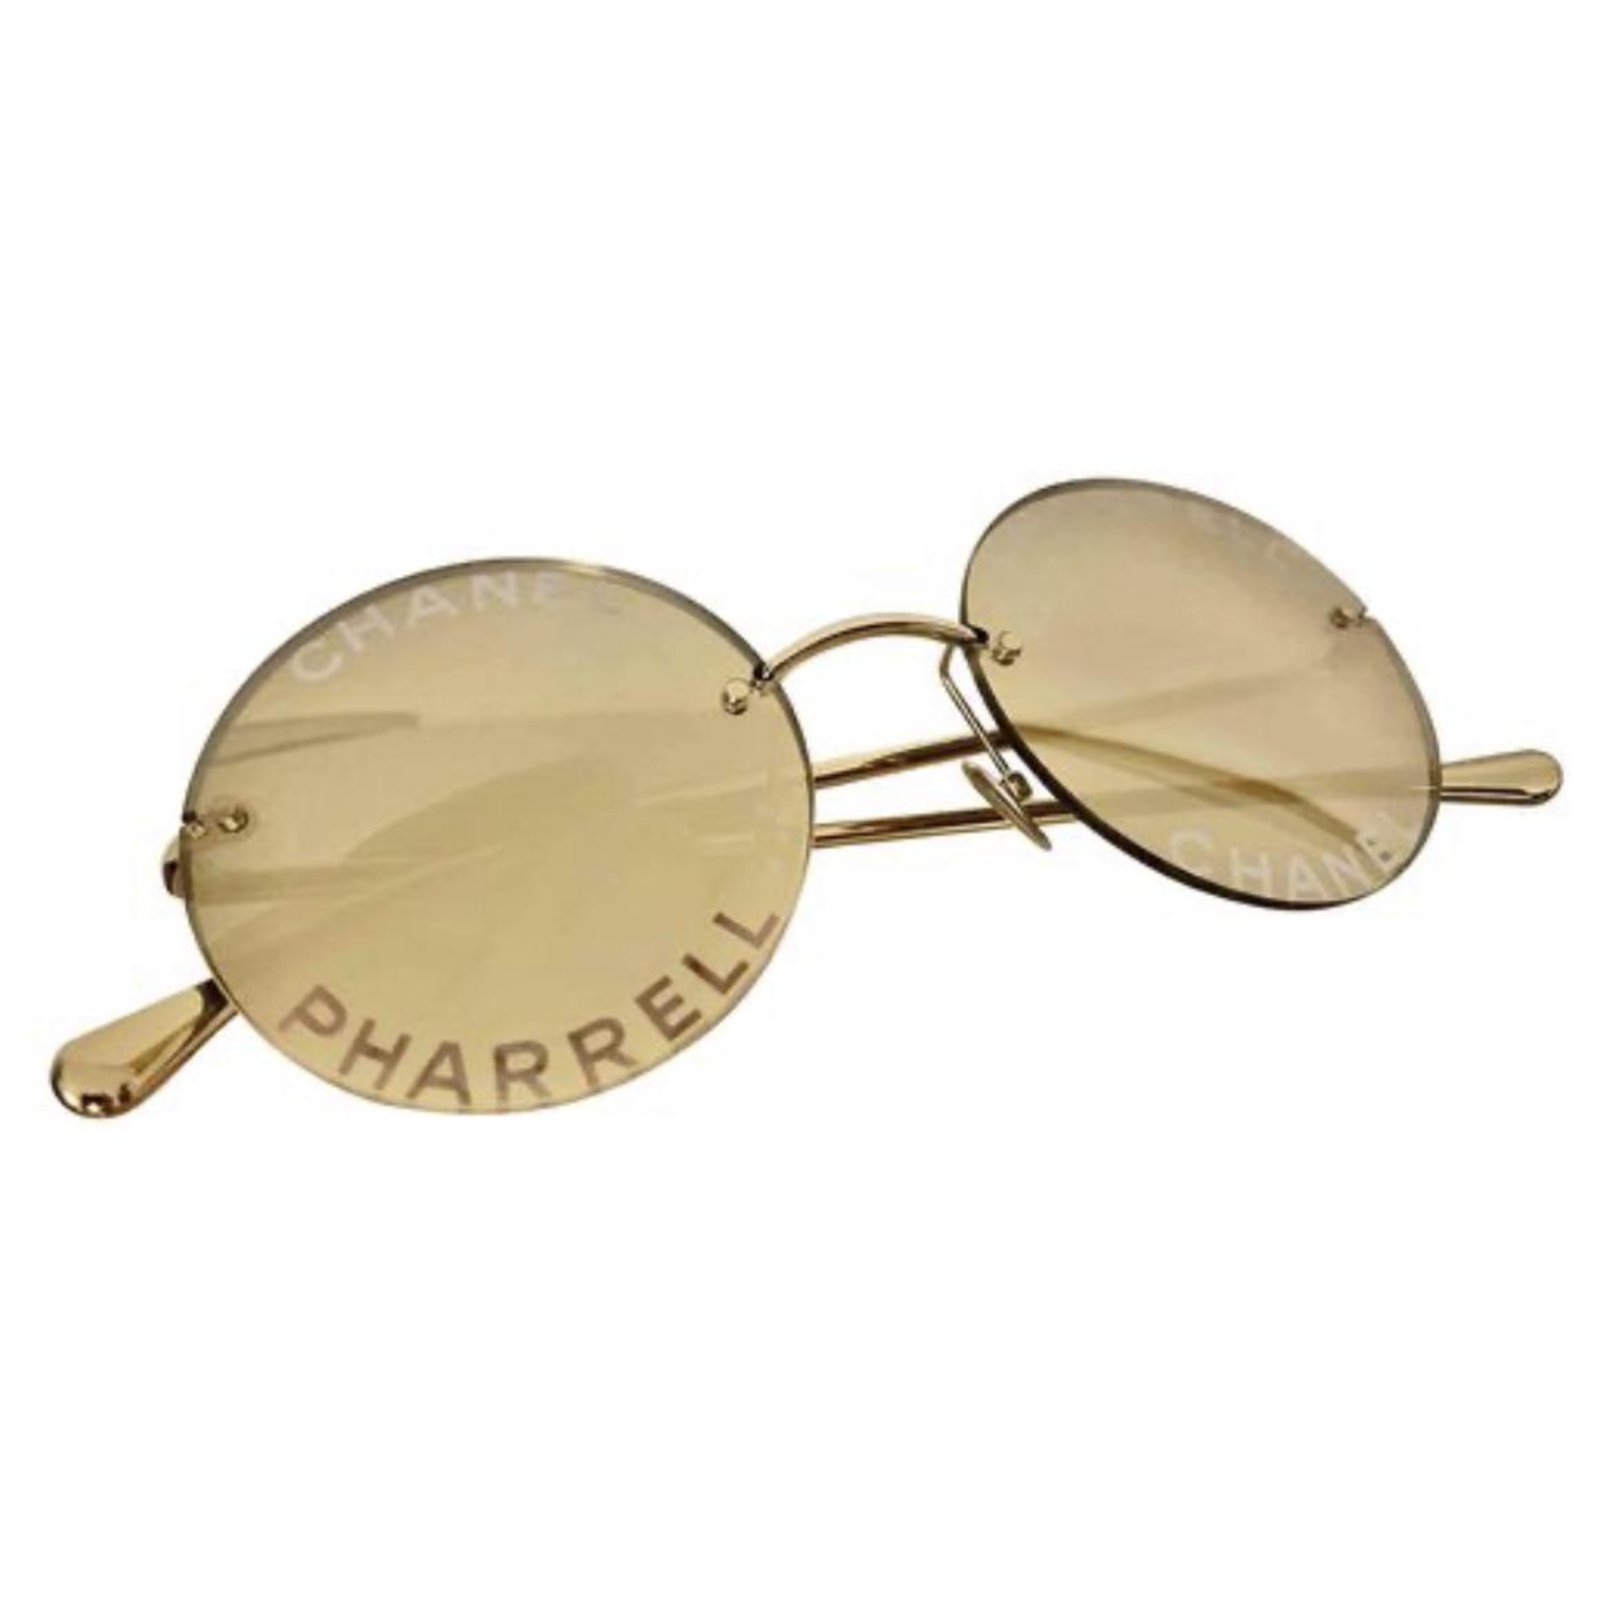 Chanel x Pharrell Williams 2019 Blue & Grey Sunglasses worn by J Balvin in  his Loco Contigo music video with DJ Snake, Tyga